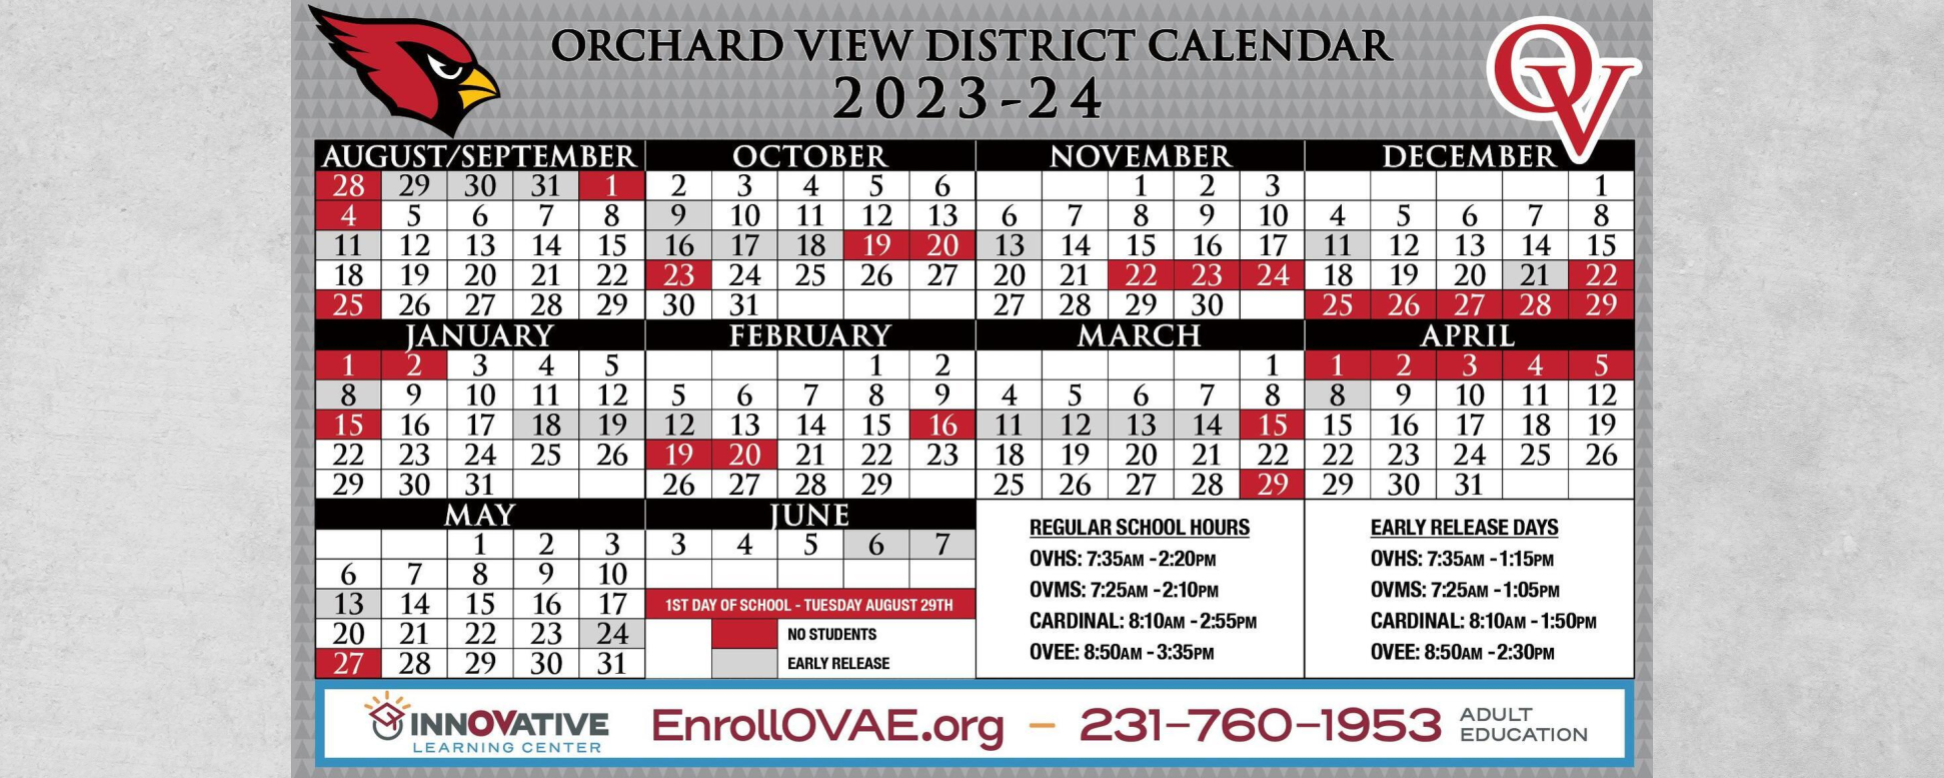 2023-2024 District Calendar